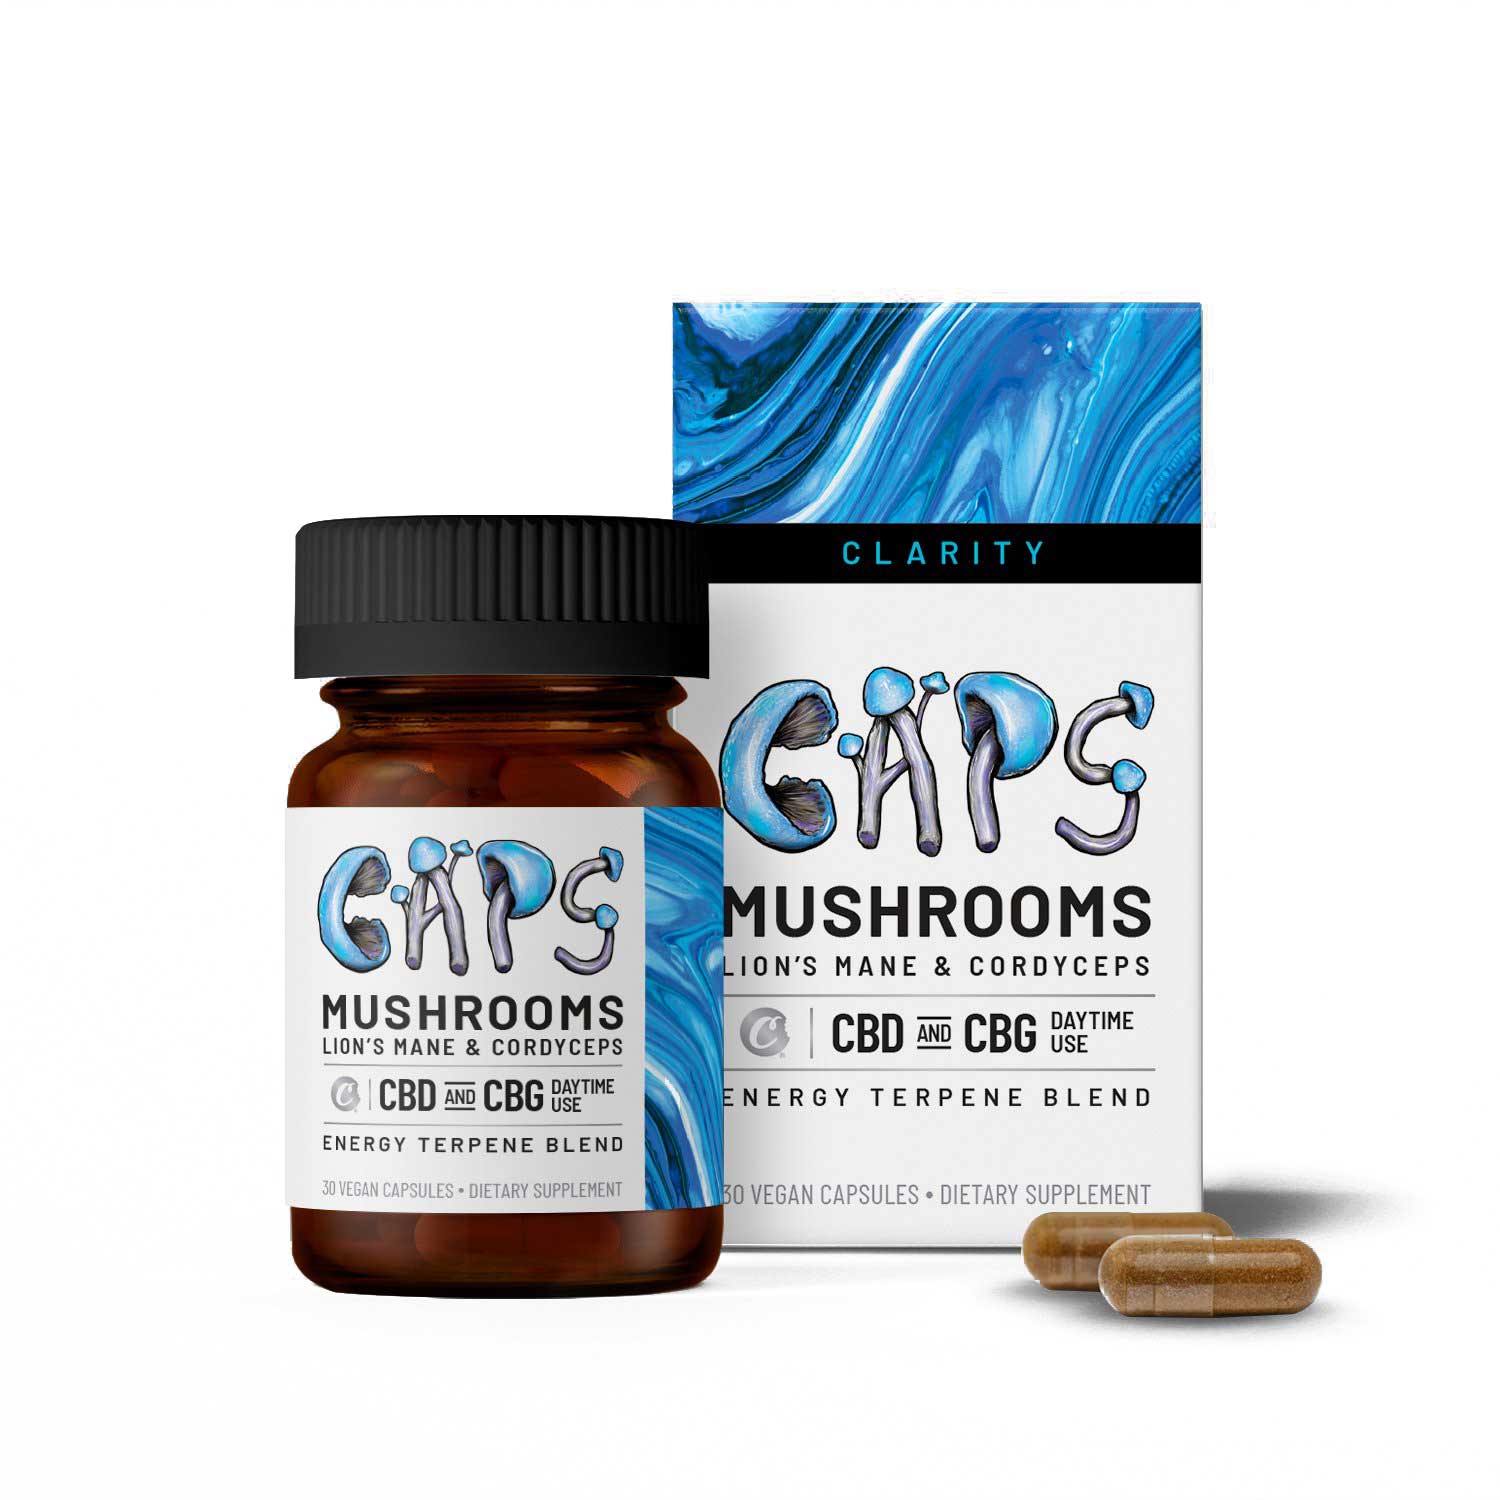 Cookies / Daytime & Night time COMBO - Mushrooms + CBG Capsules